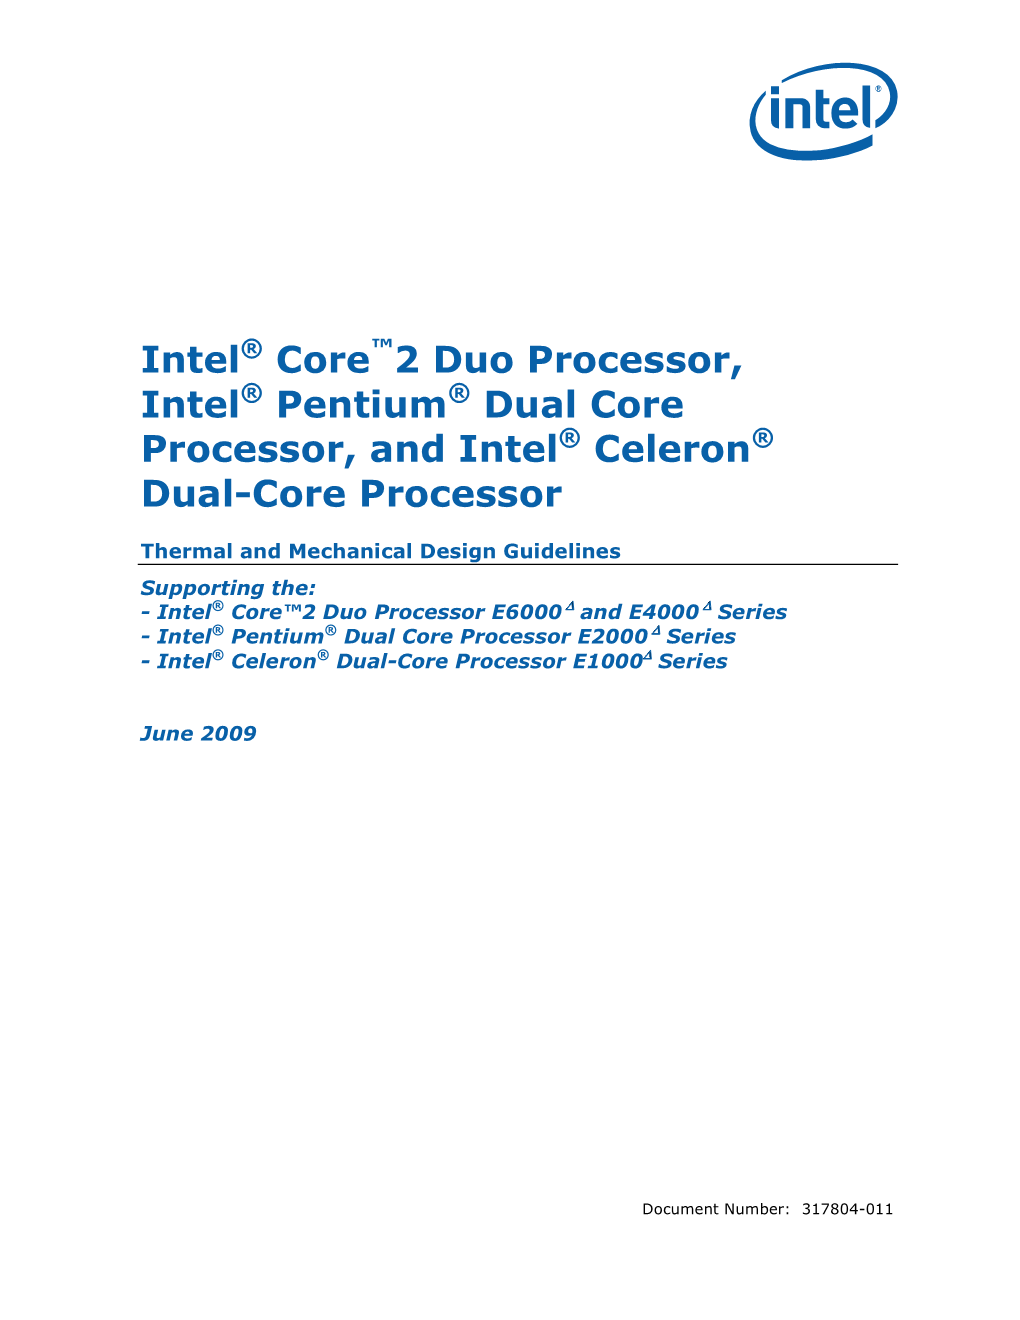 Intel Core 2 Duo Processor, Intel Pentium Dual Core Processor, and Intel Celeron Dual-Core Processor